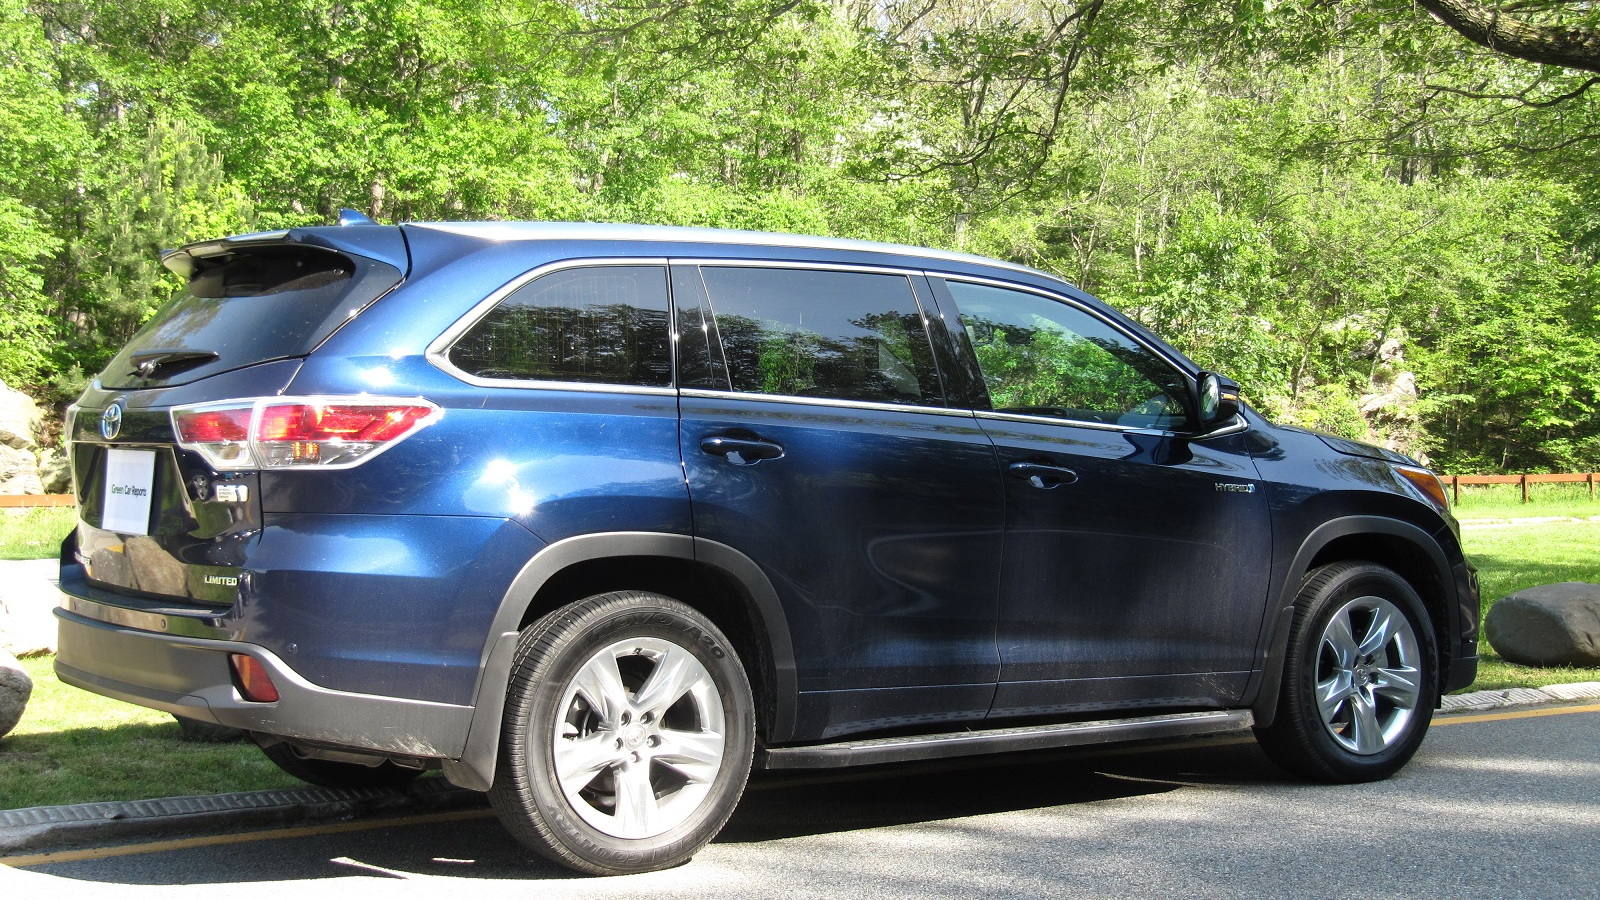 2014 Toyota Highlander Hybrid, Palisades Interstate Park, New York, June 2014